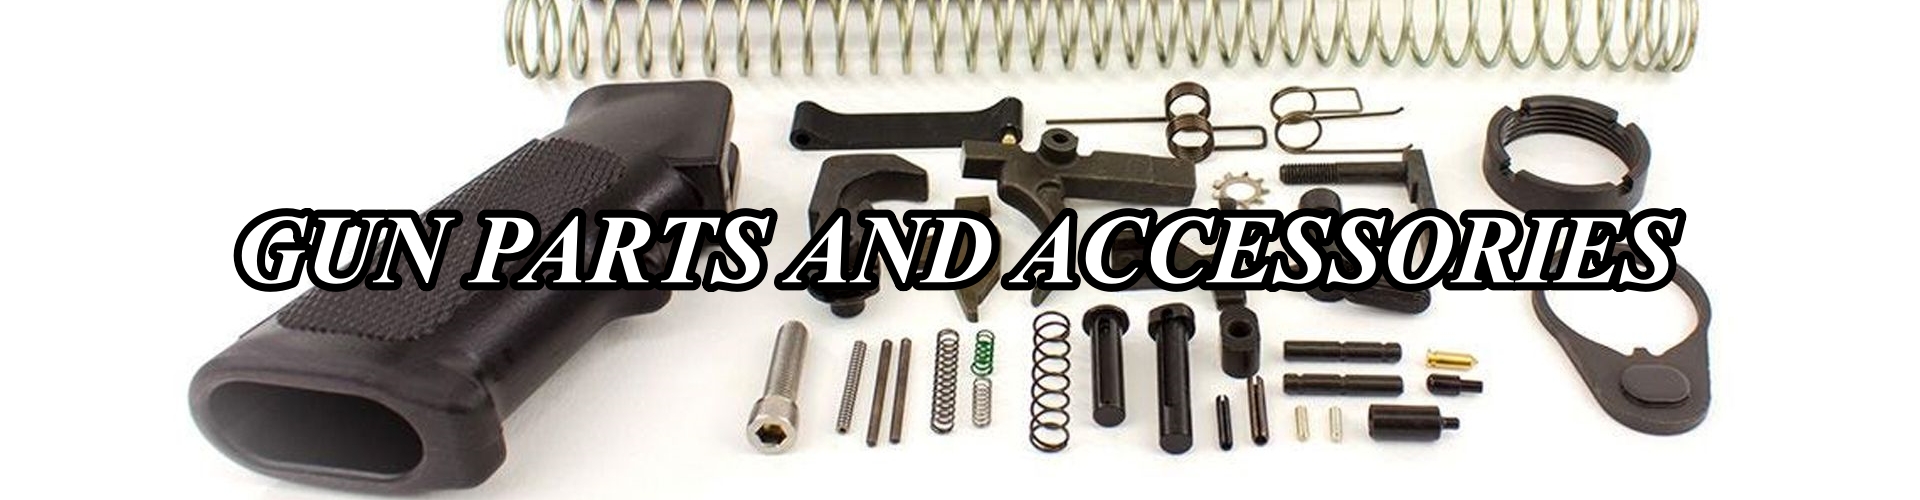 LSA - GUN PARTS AND ACCESSORIES